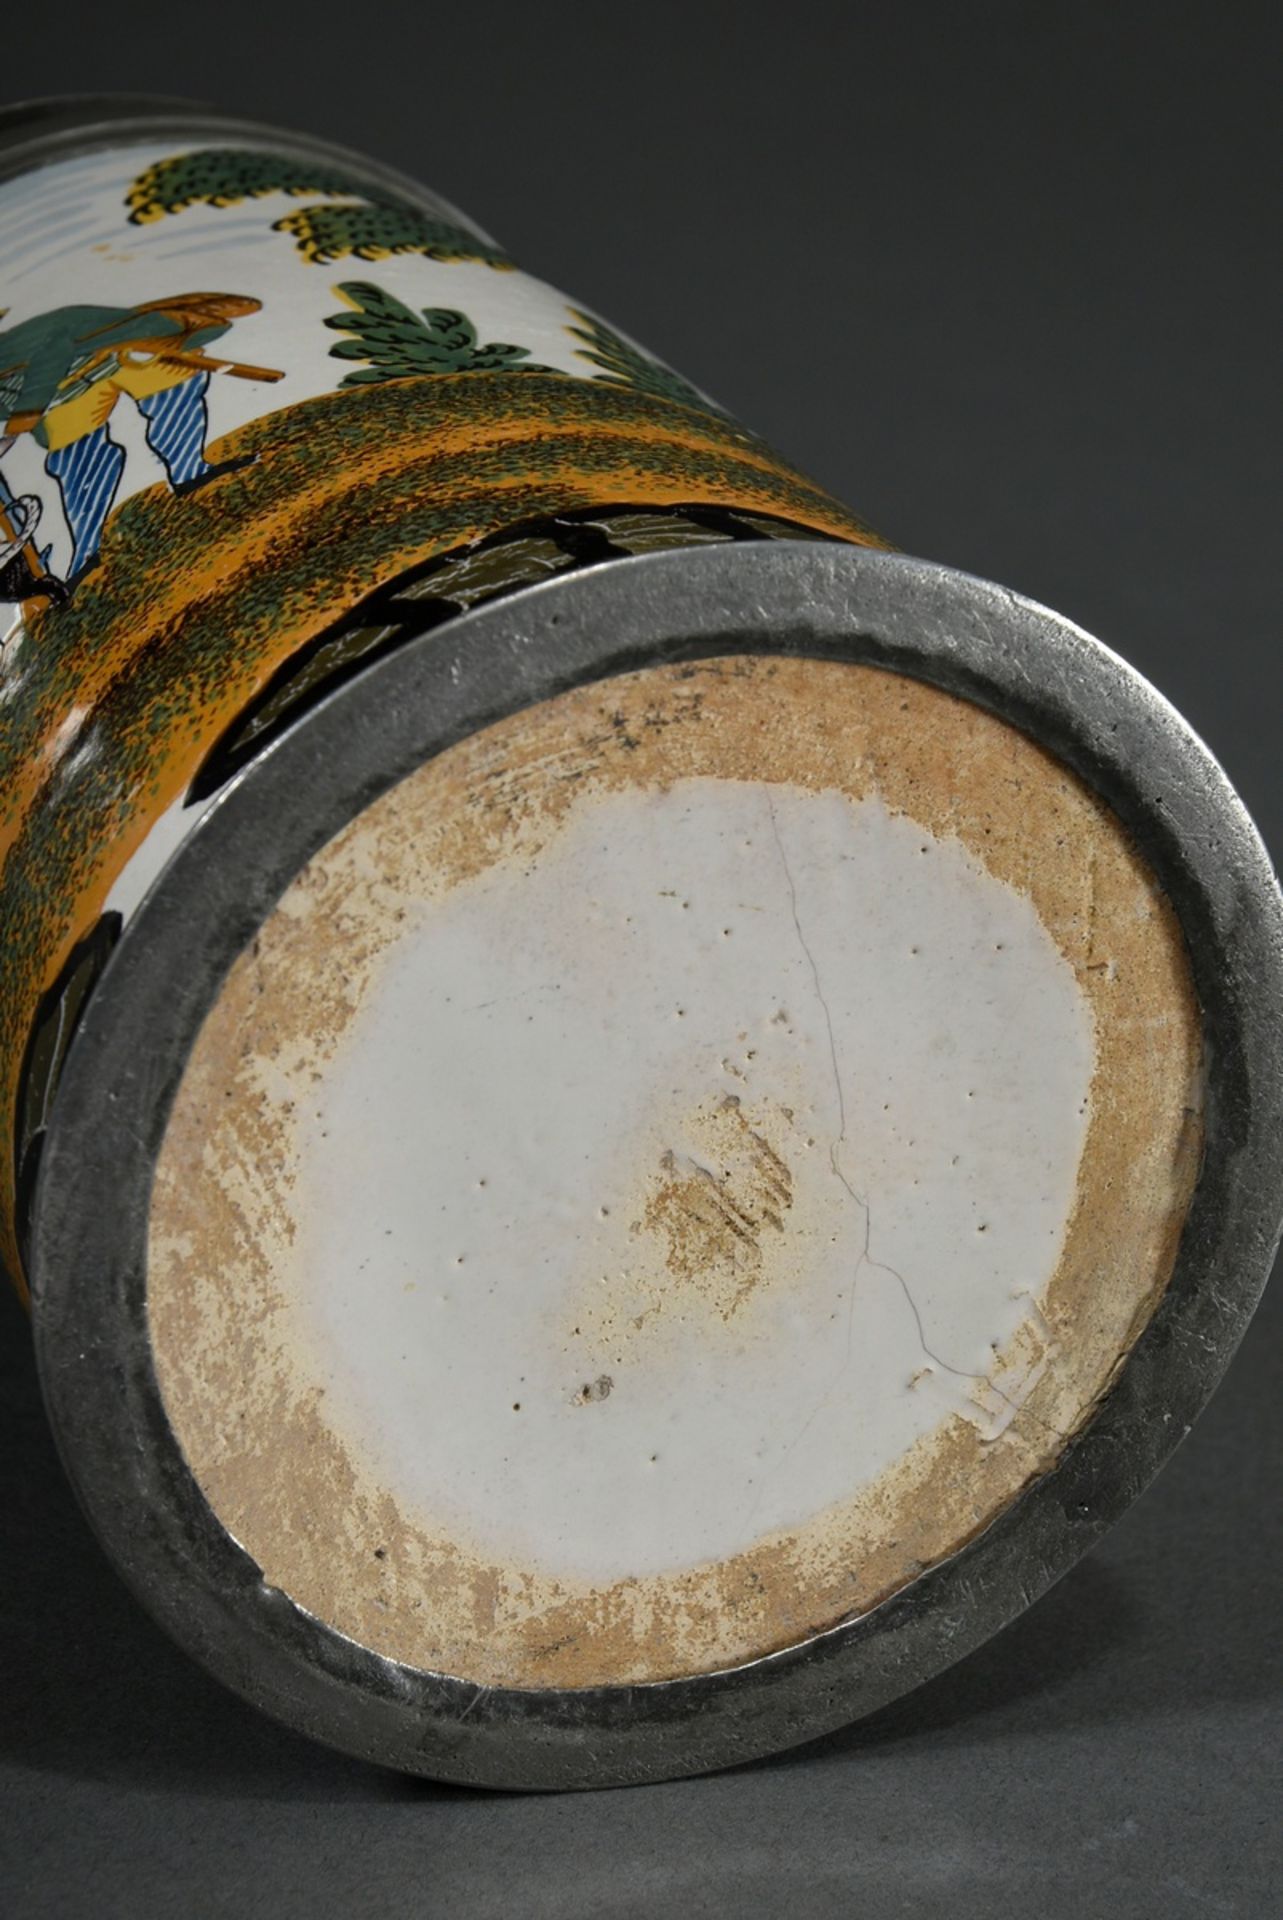 Crailsheim Fayence Walzenkrug in cylinder form, white glazed with Scharffeuerfarben in manganese, y - Image 8 of 8